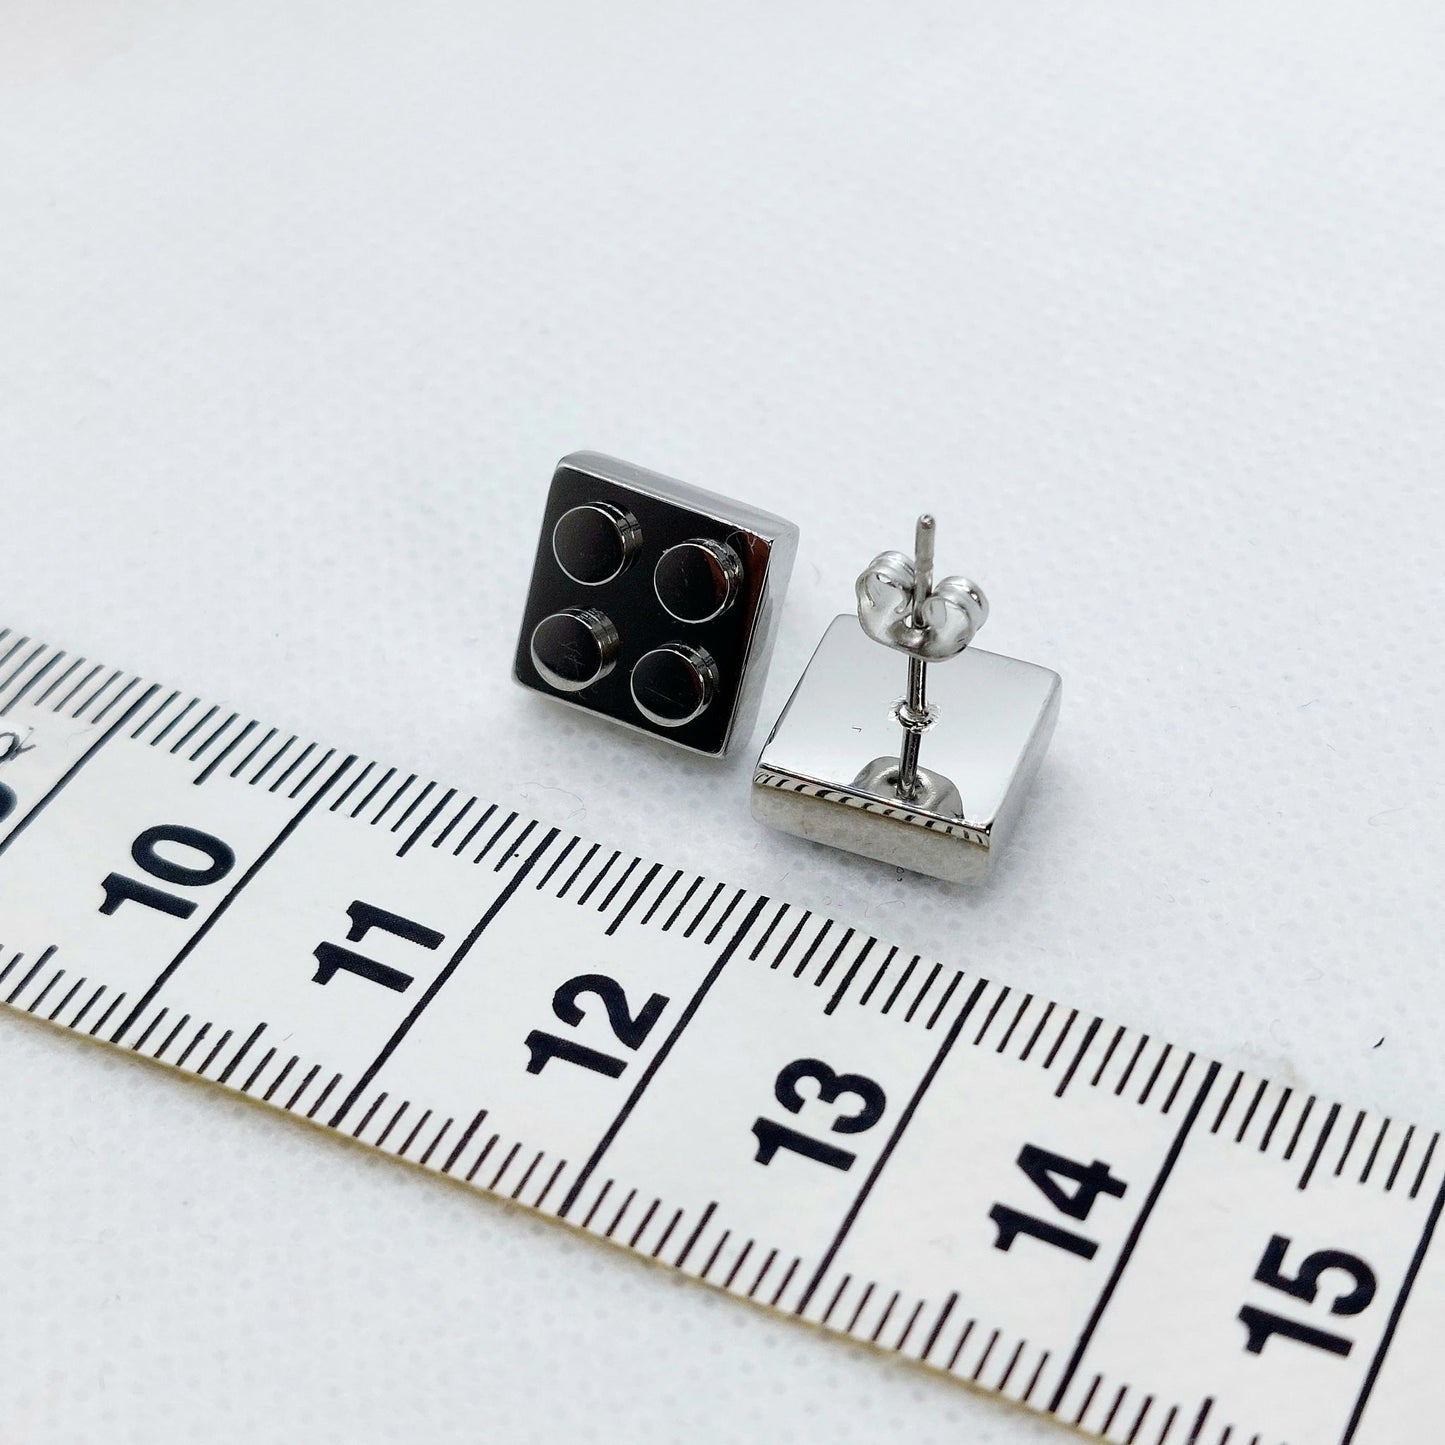 Lego Earrings - Stainless Steel